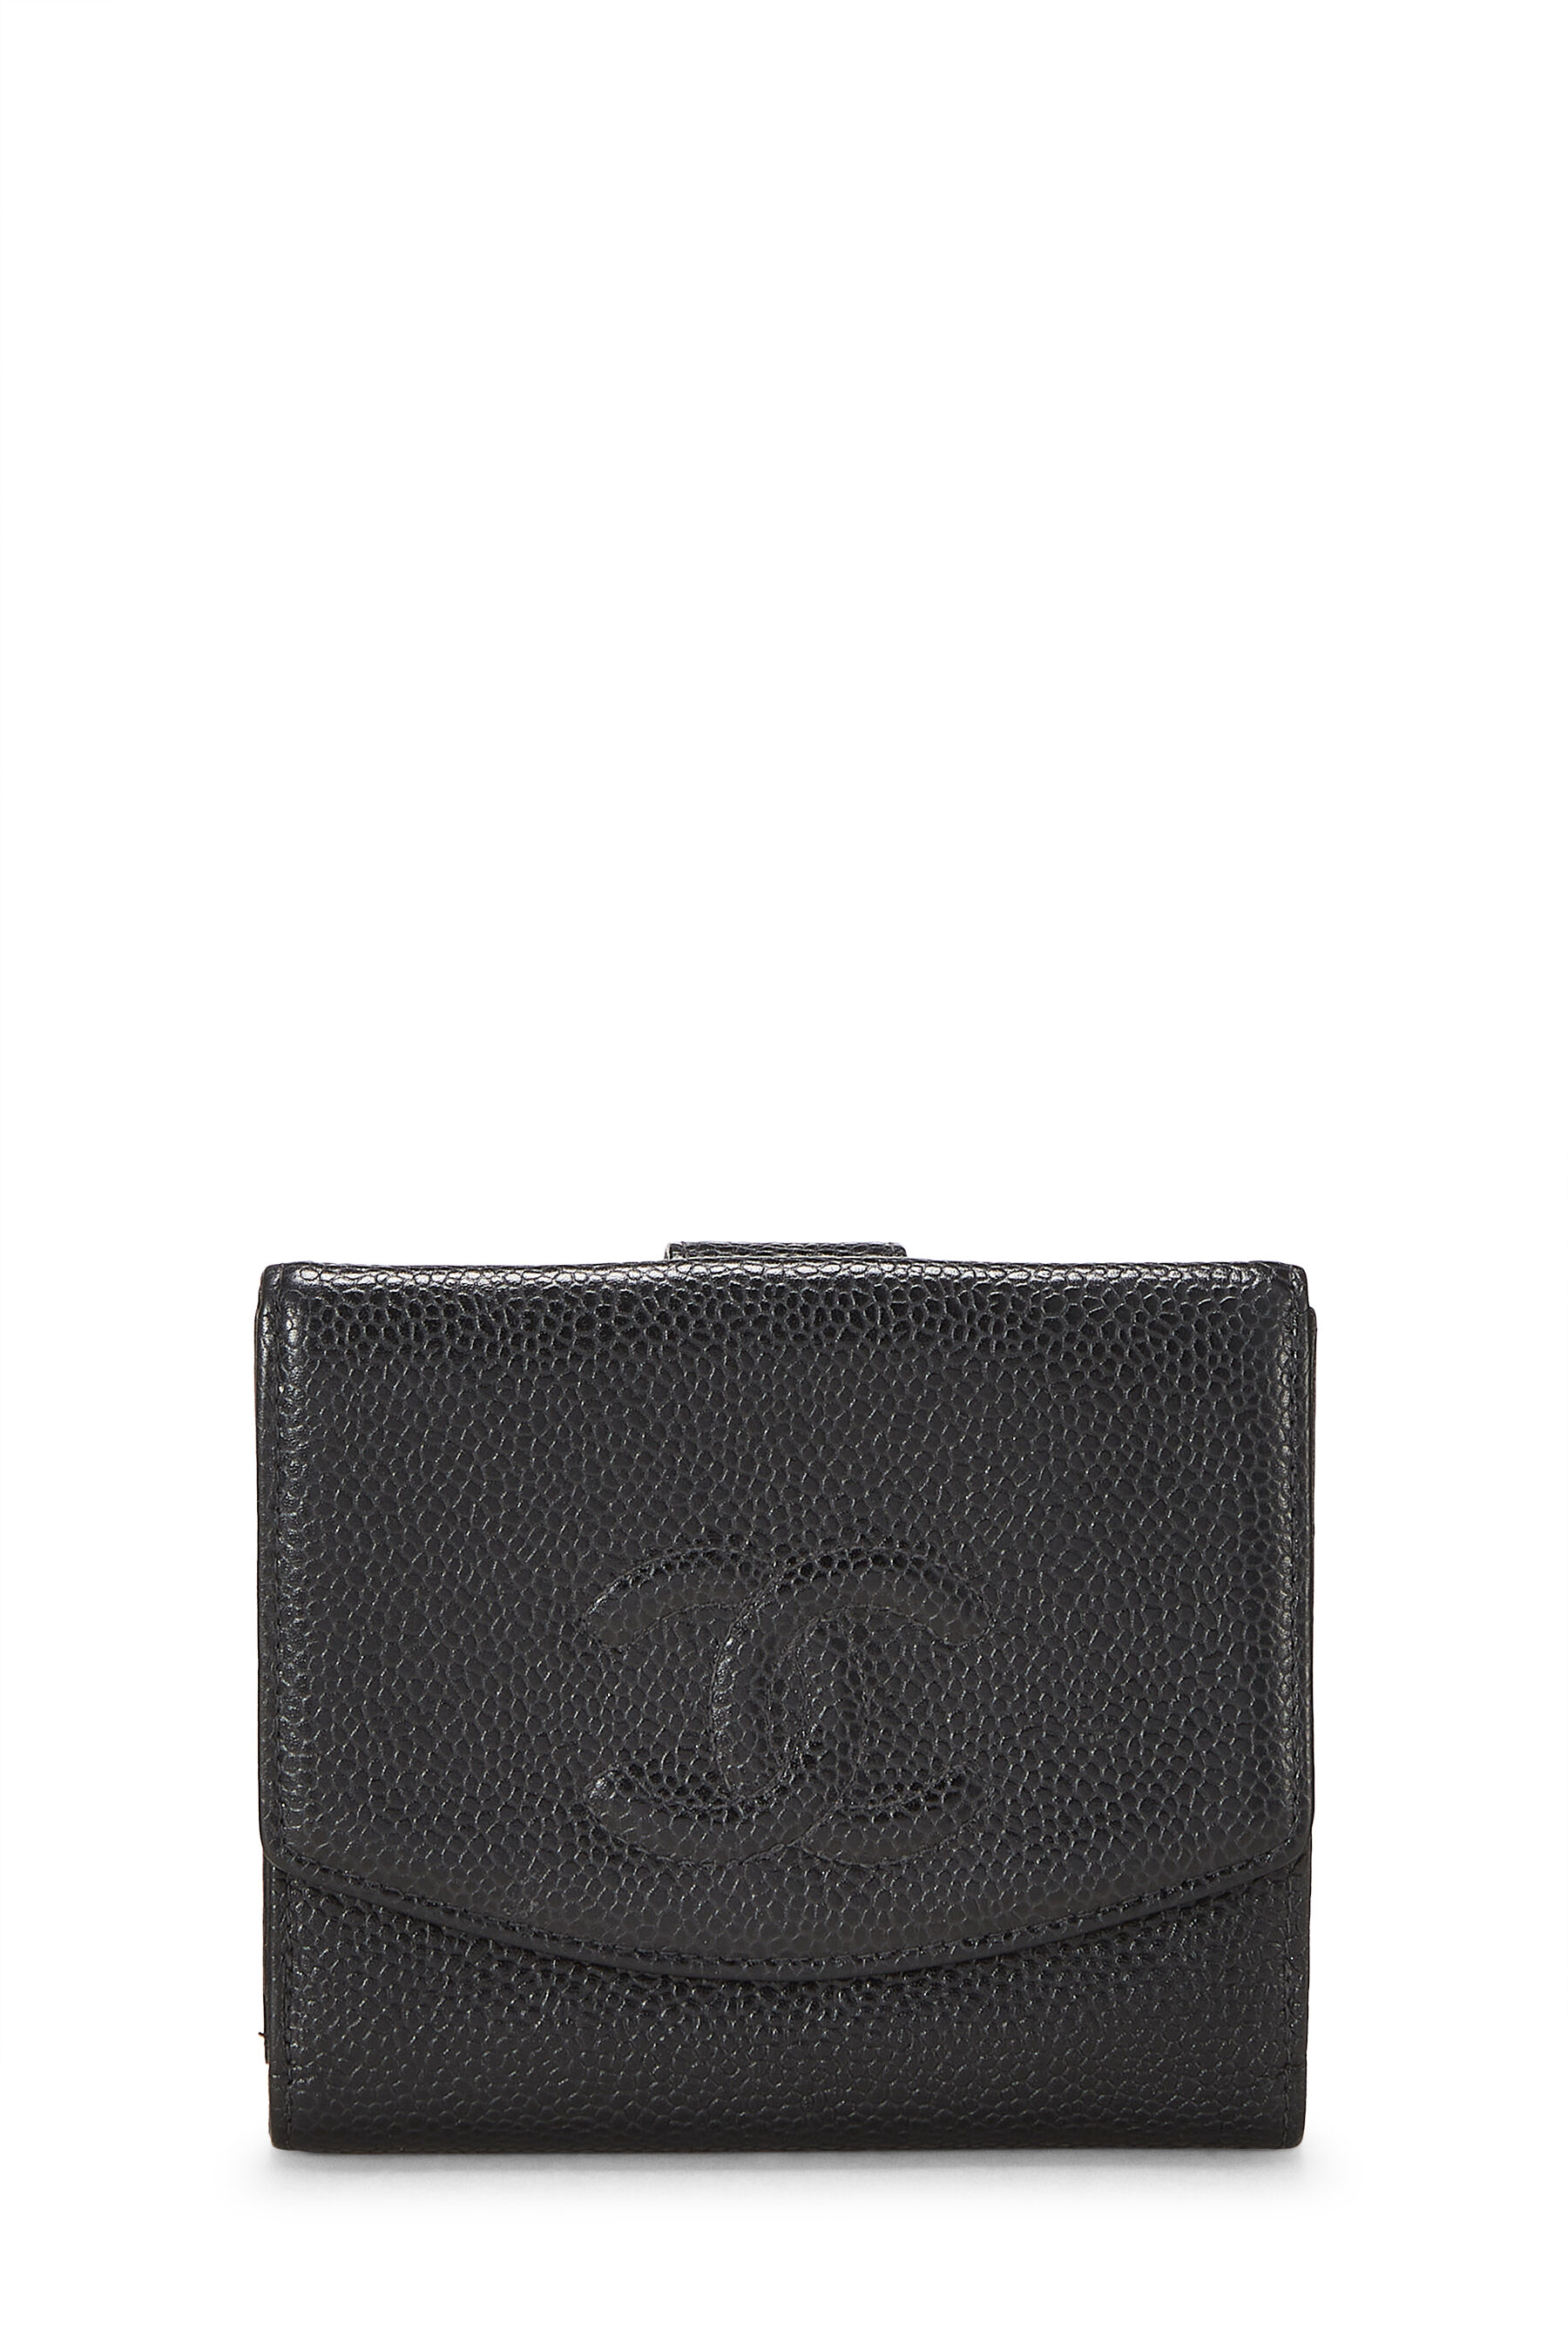 Chanel Black Caviar Timeless CC Compact Wallet Q6A1O40FKB007  WGACA